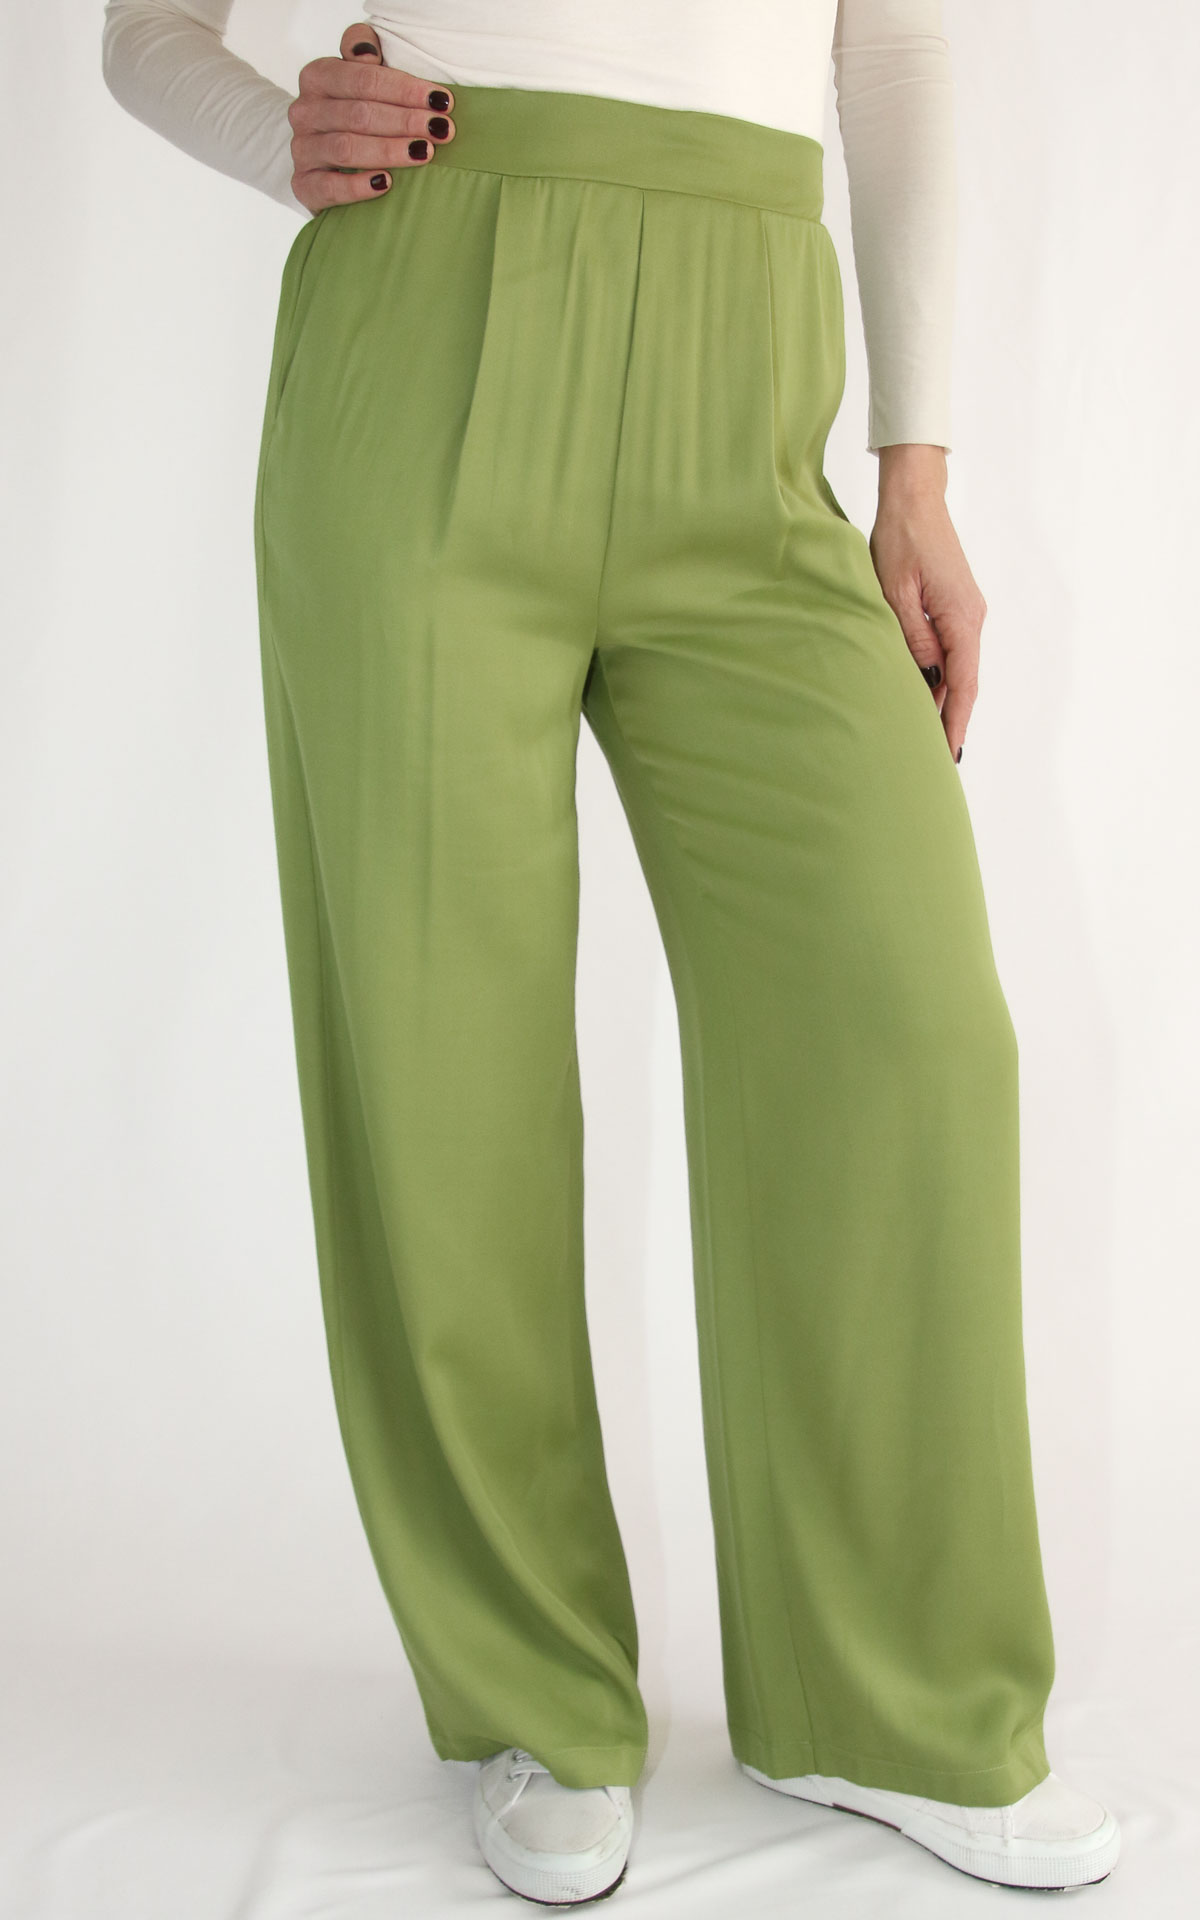 Wu' Side - Pantalone raso - Verde pistacchio